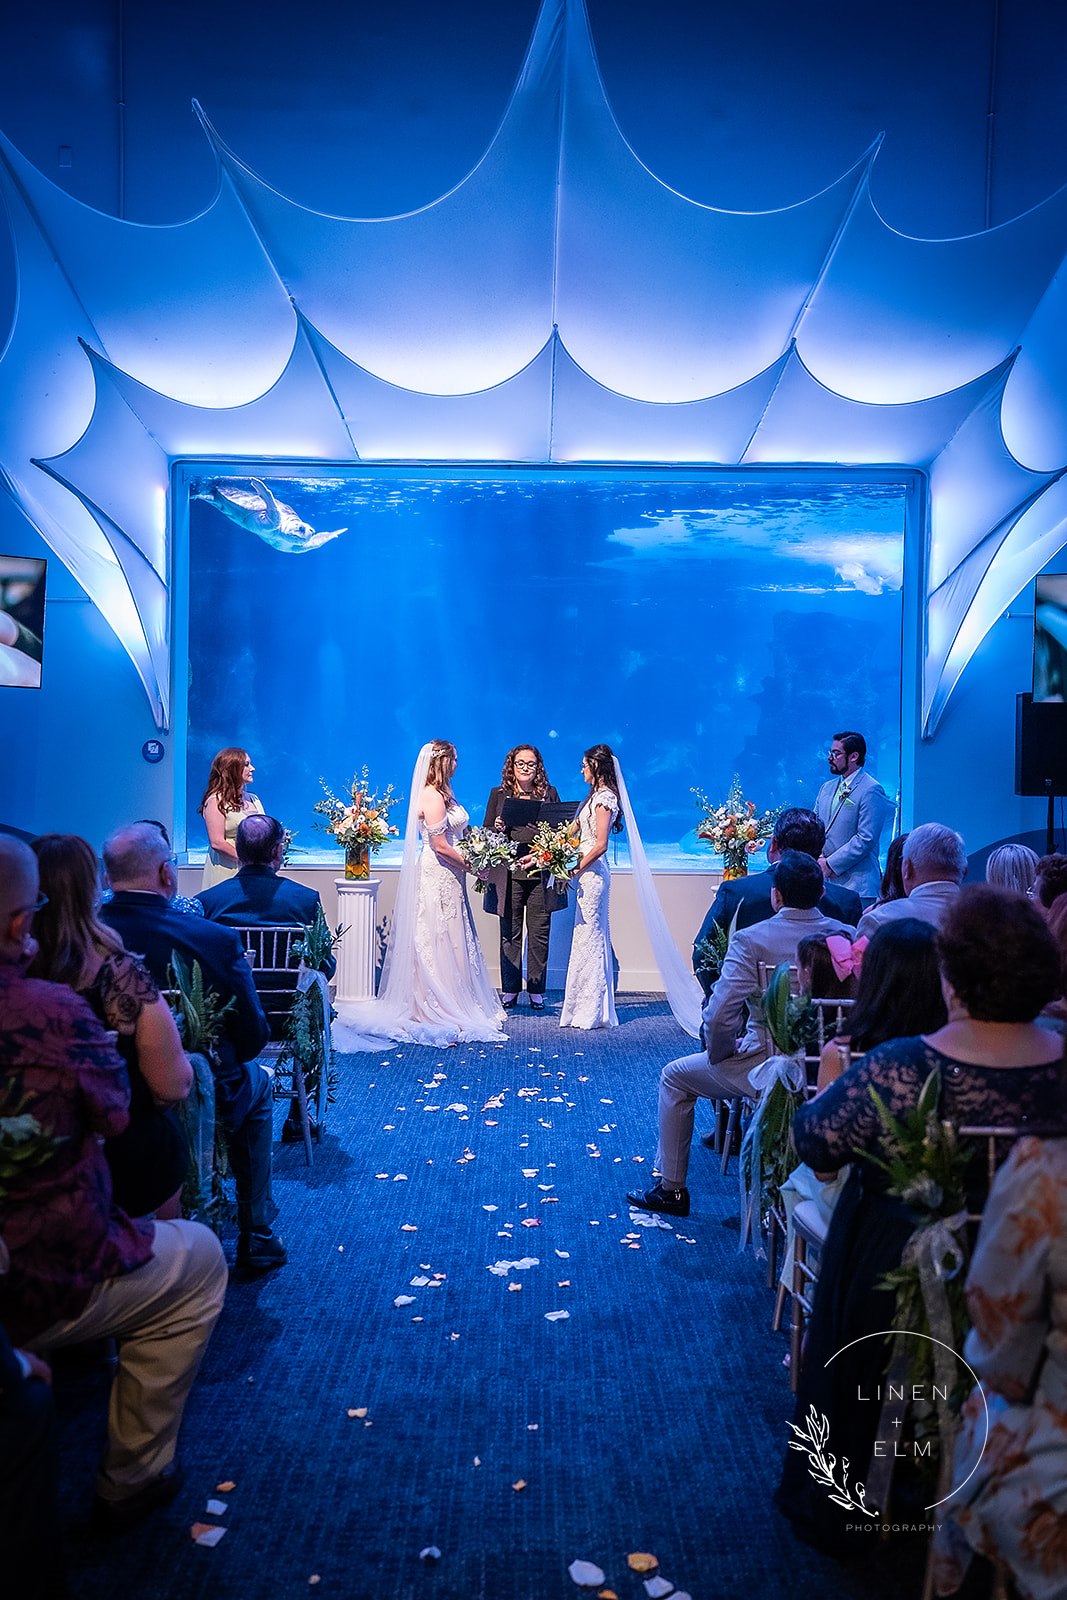 Two brides getting married Newport Aquarium Cincinnati Kentucky lbgtq wedding photography